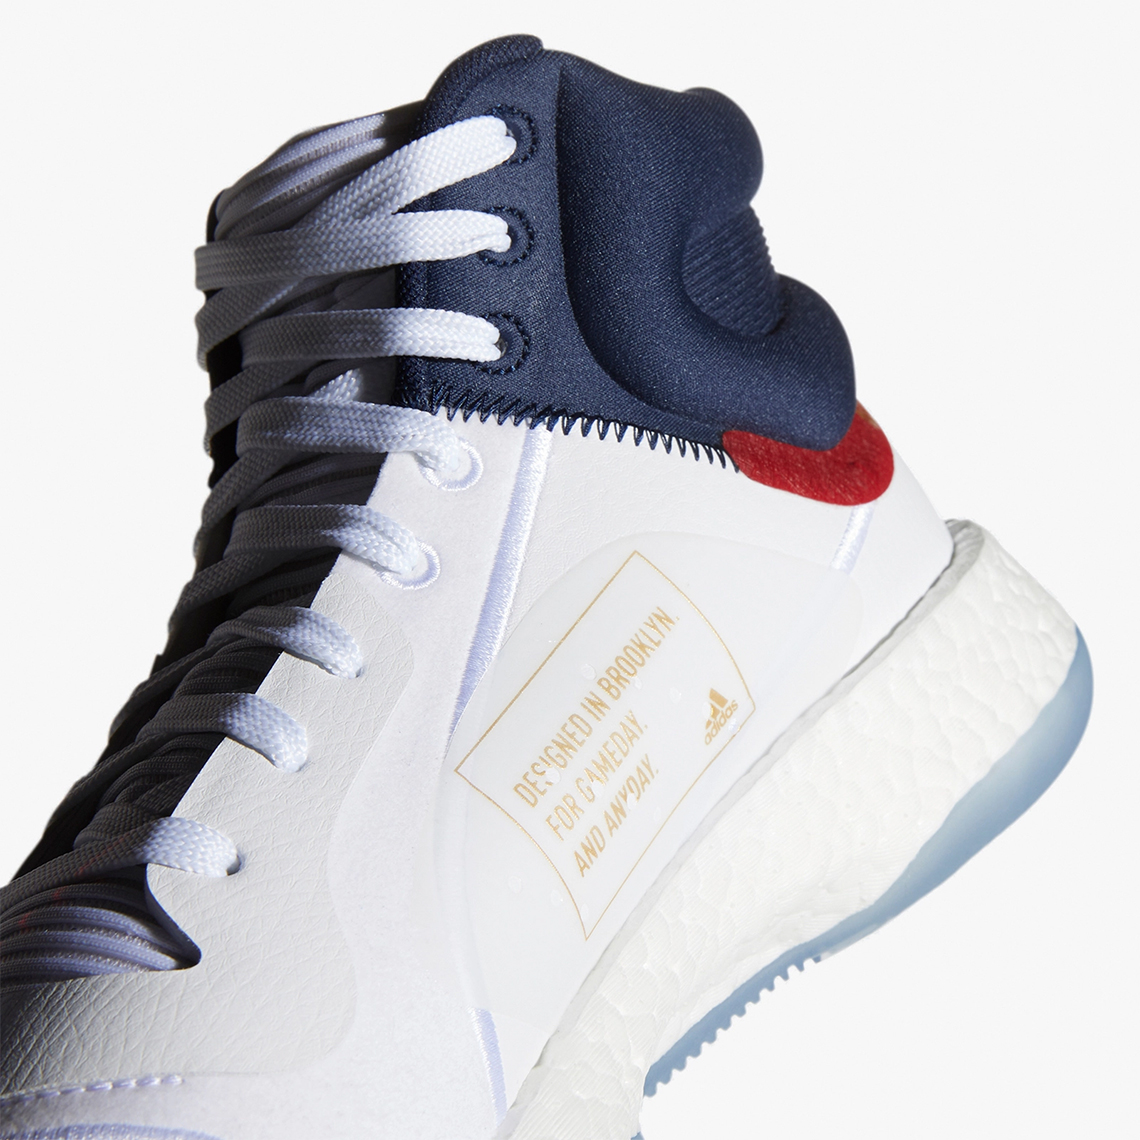 adidas Marquee Boost Top Ten EH2451 Release Date | SneakerNews.com